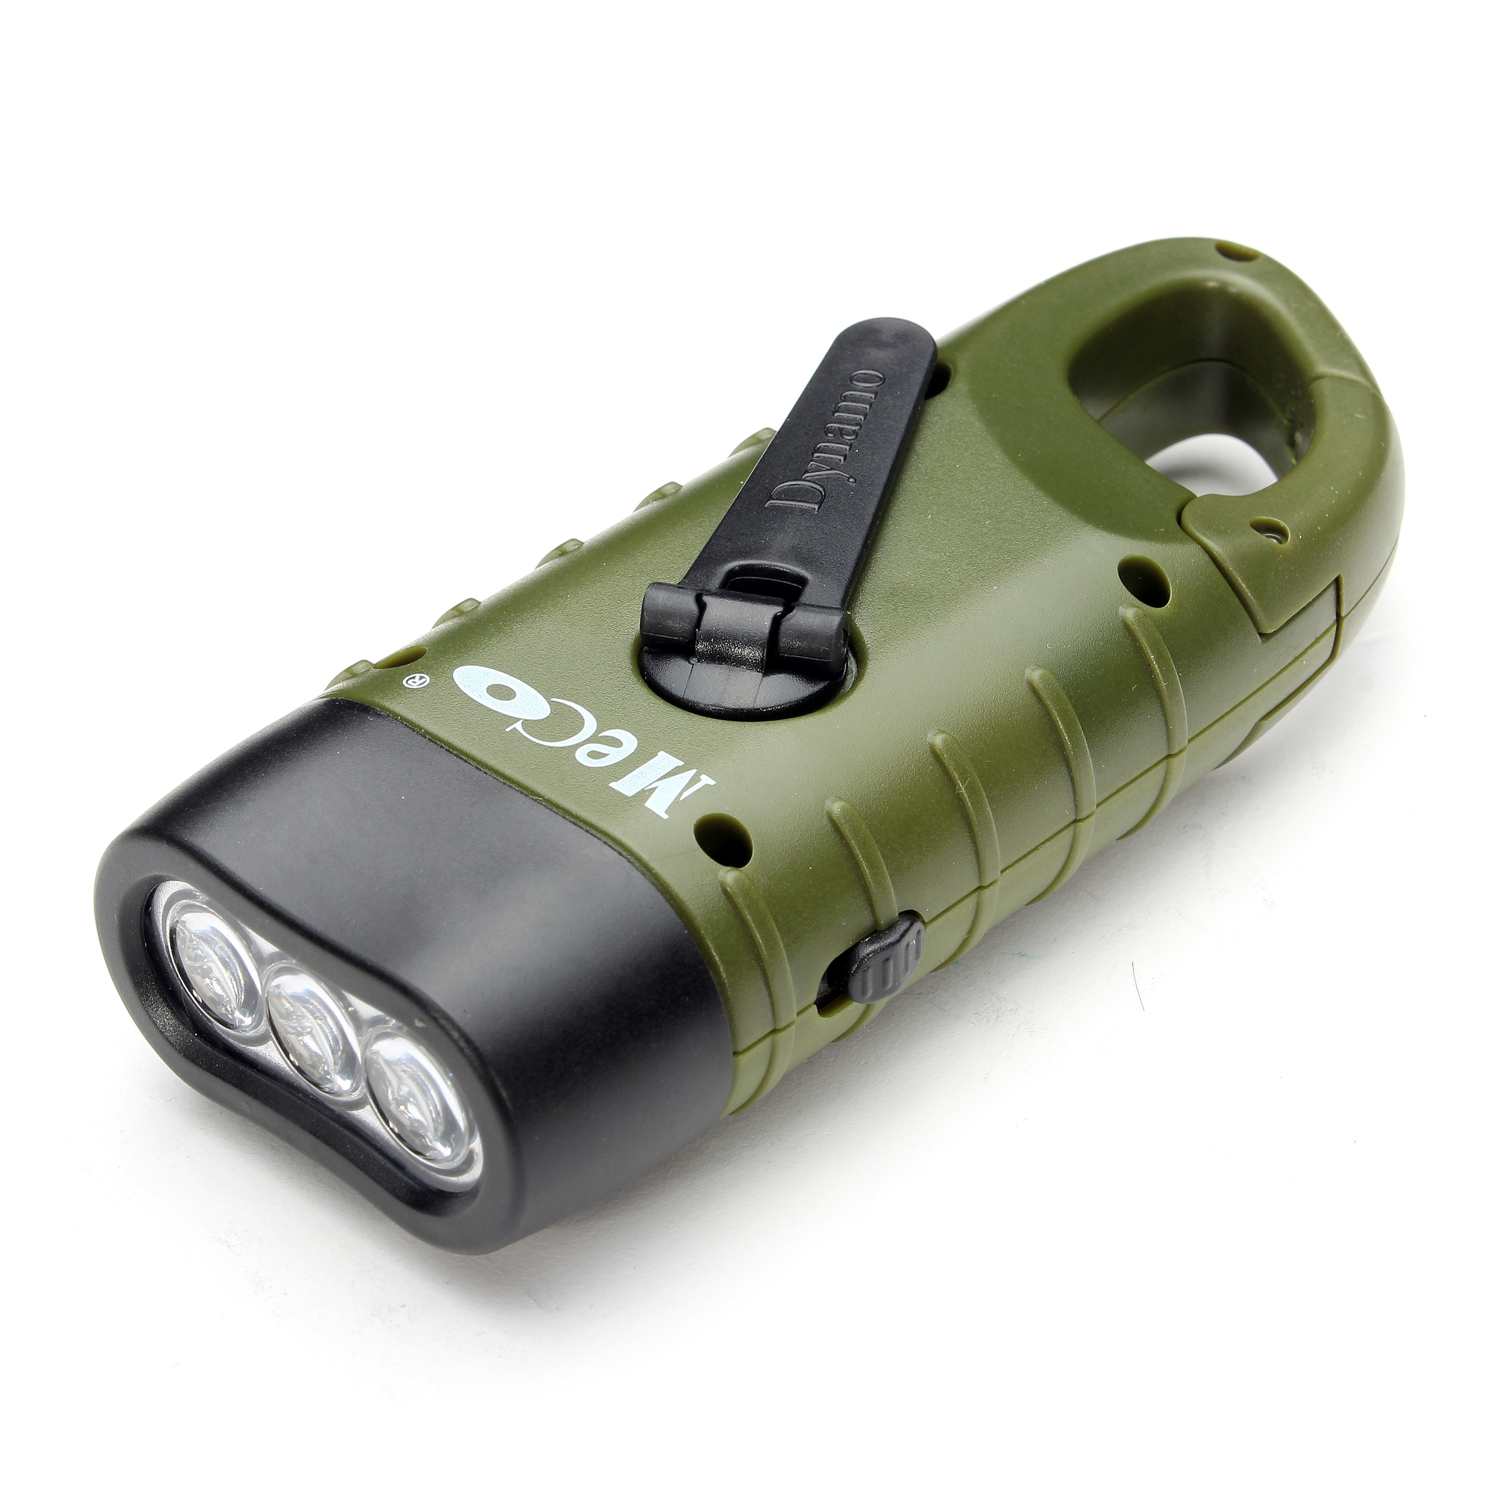 Crank Flashlight Mini Emergency Light